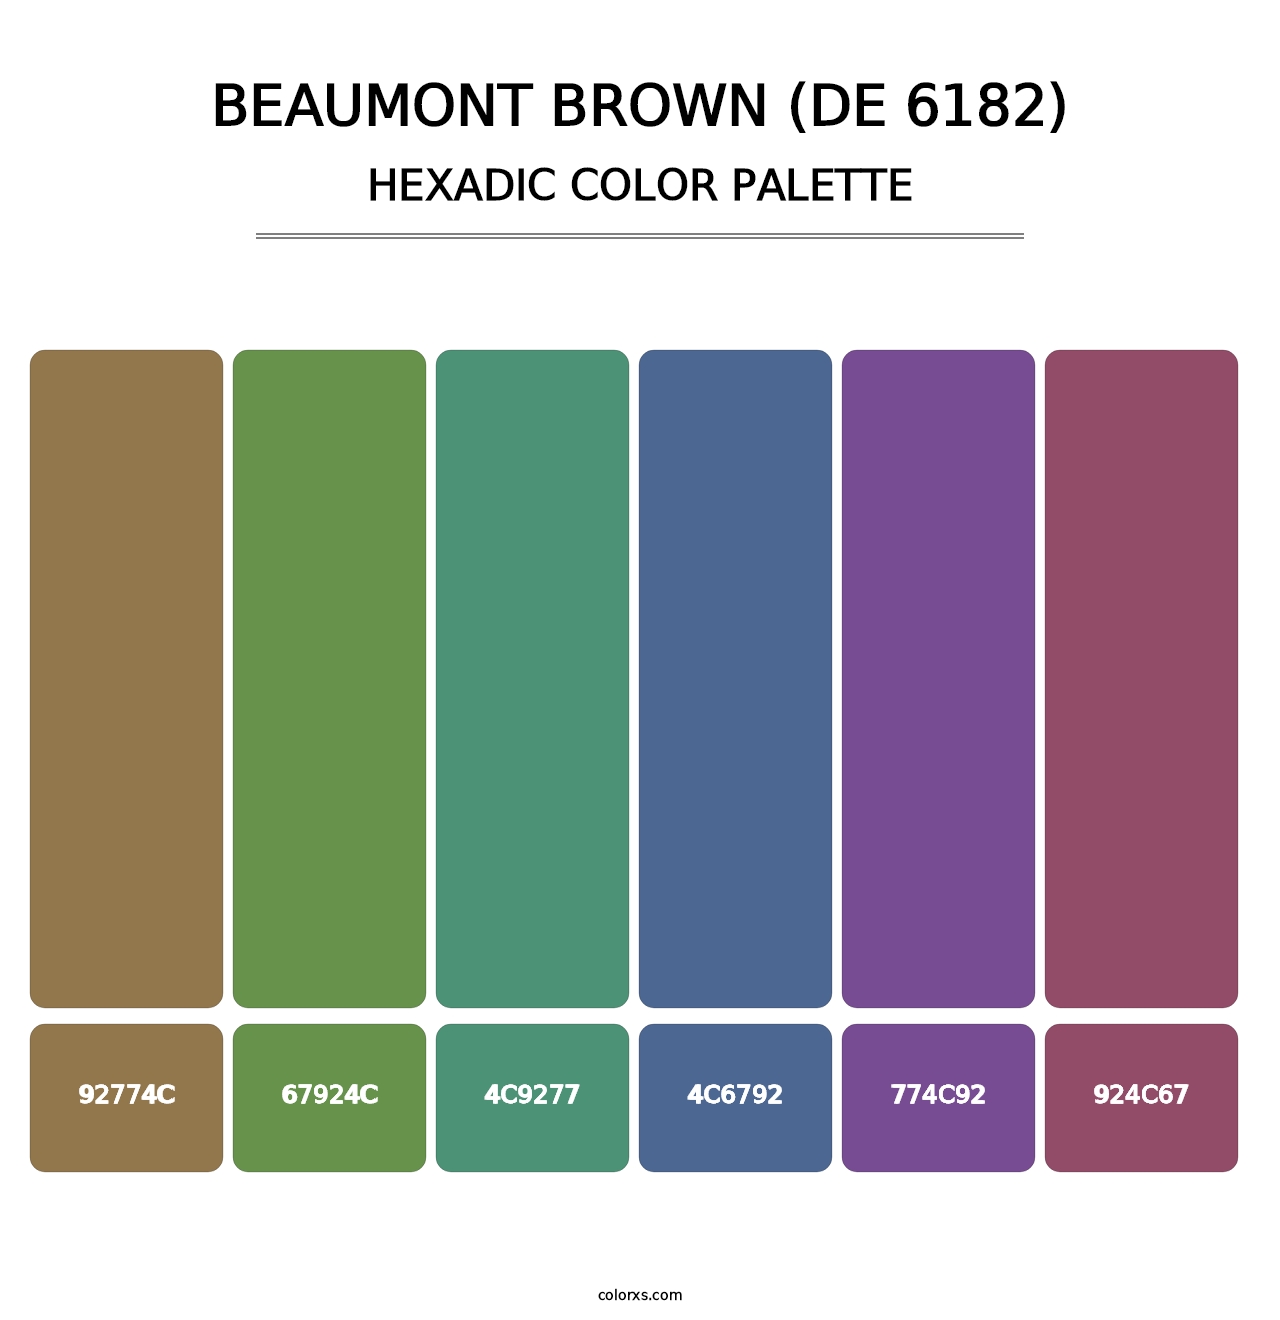 Beaumont Brown (DE 6182) - Hexadic Color Palette